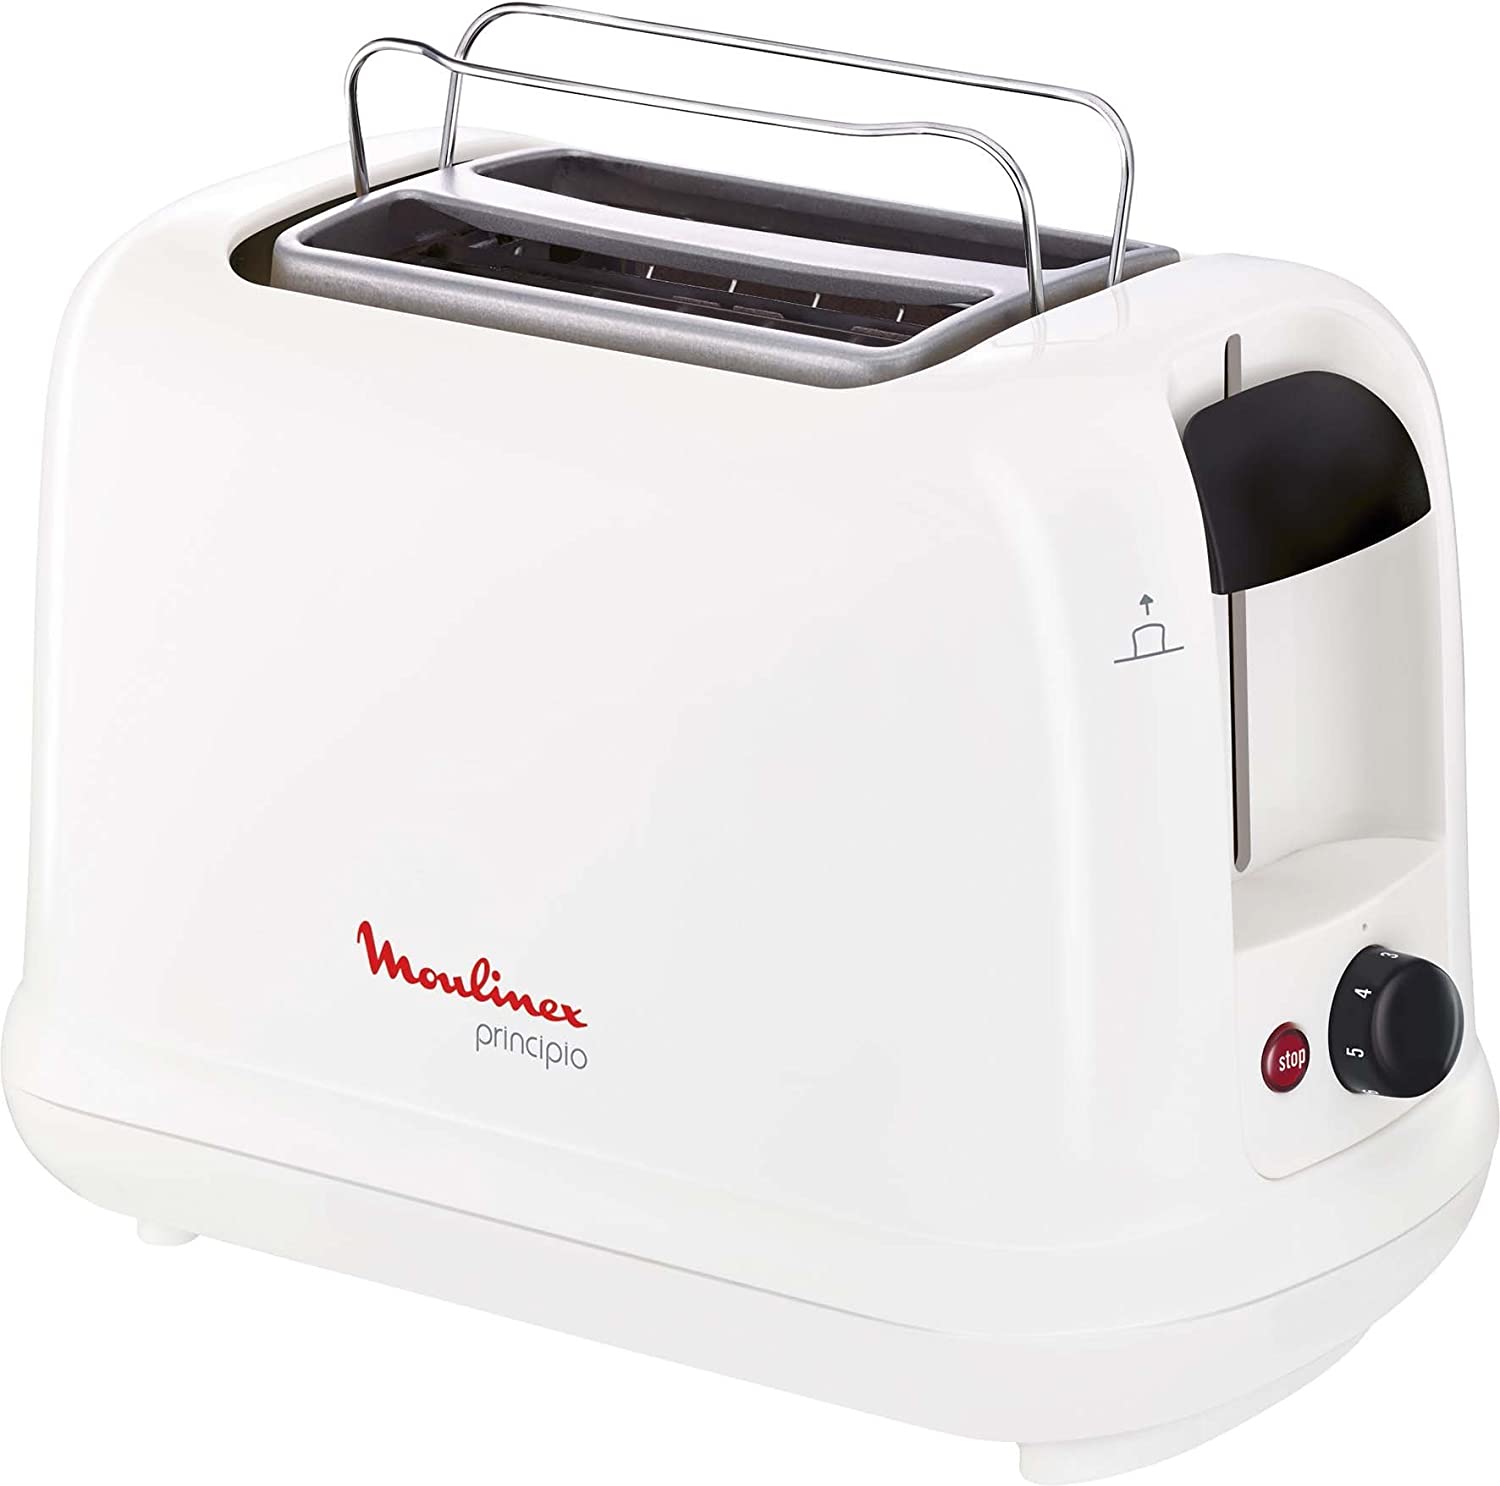 Moulinex Principio LT1611 Toaster, White